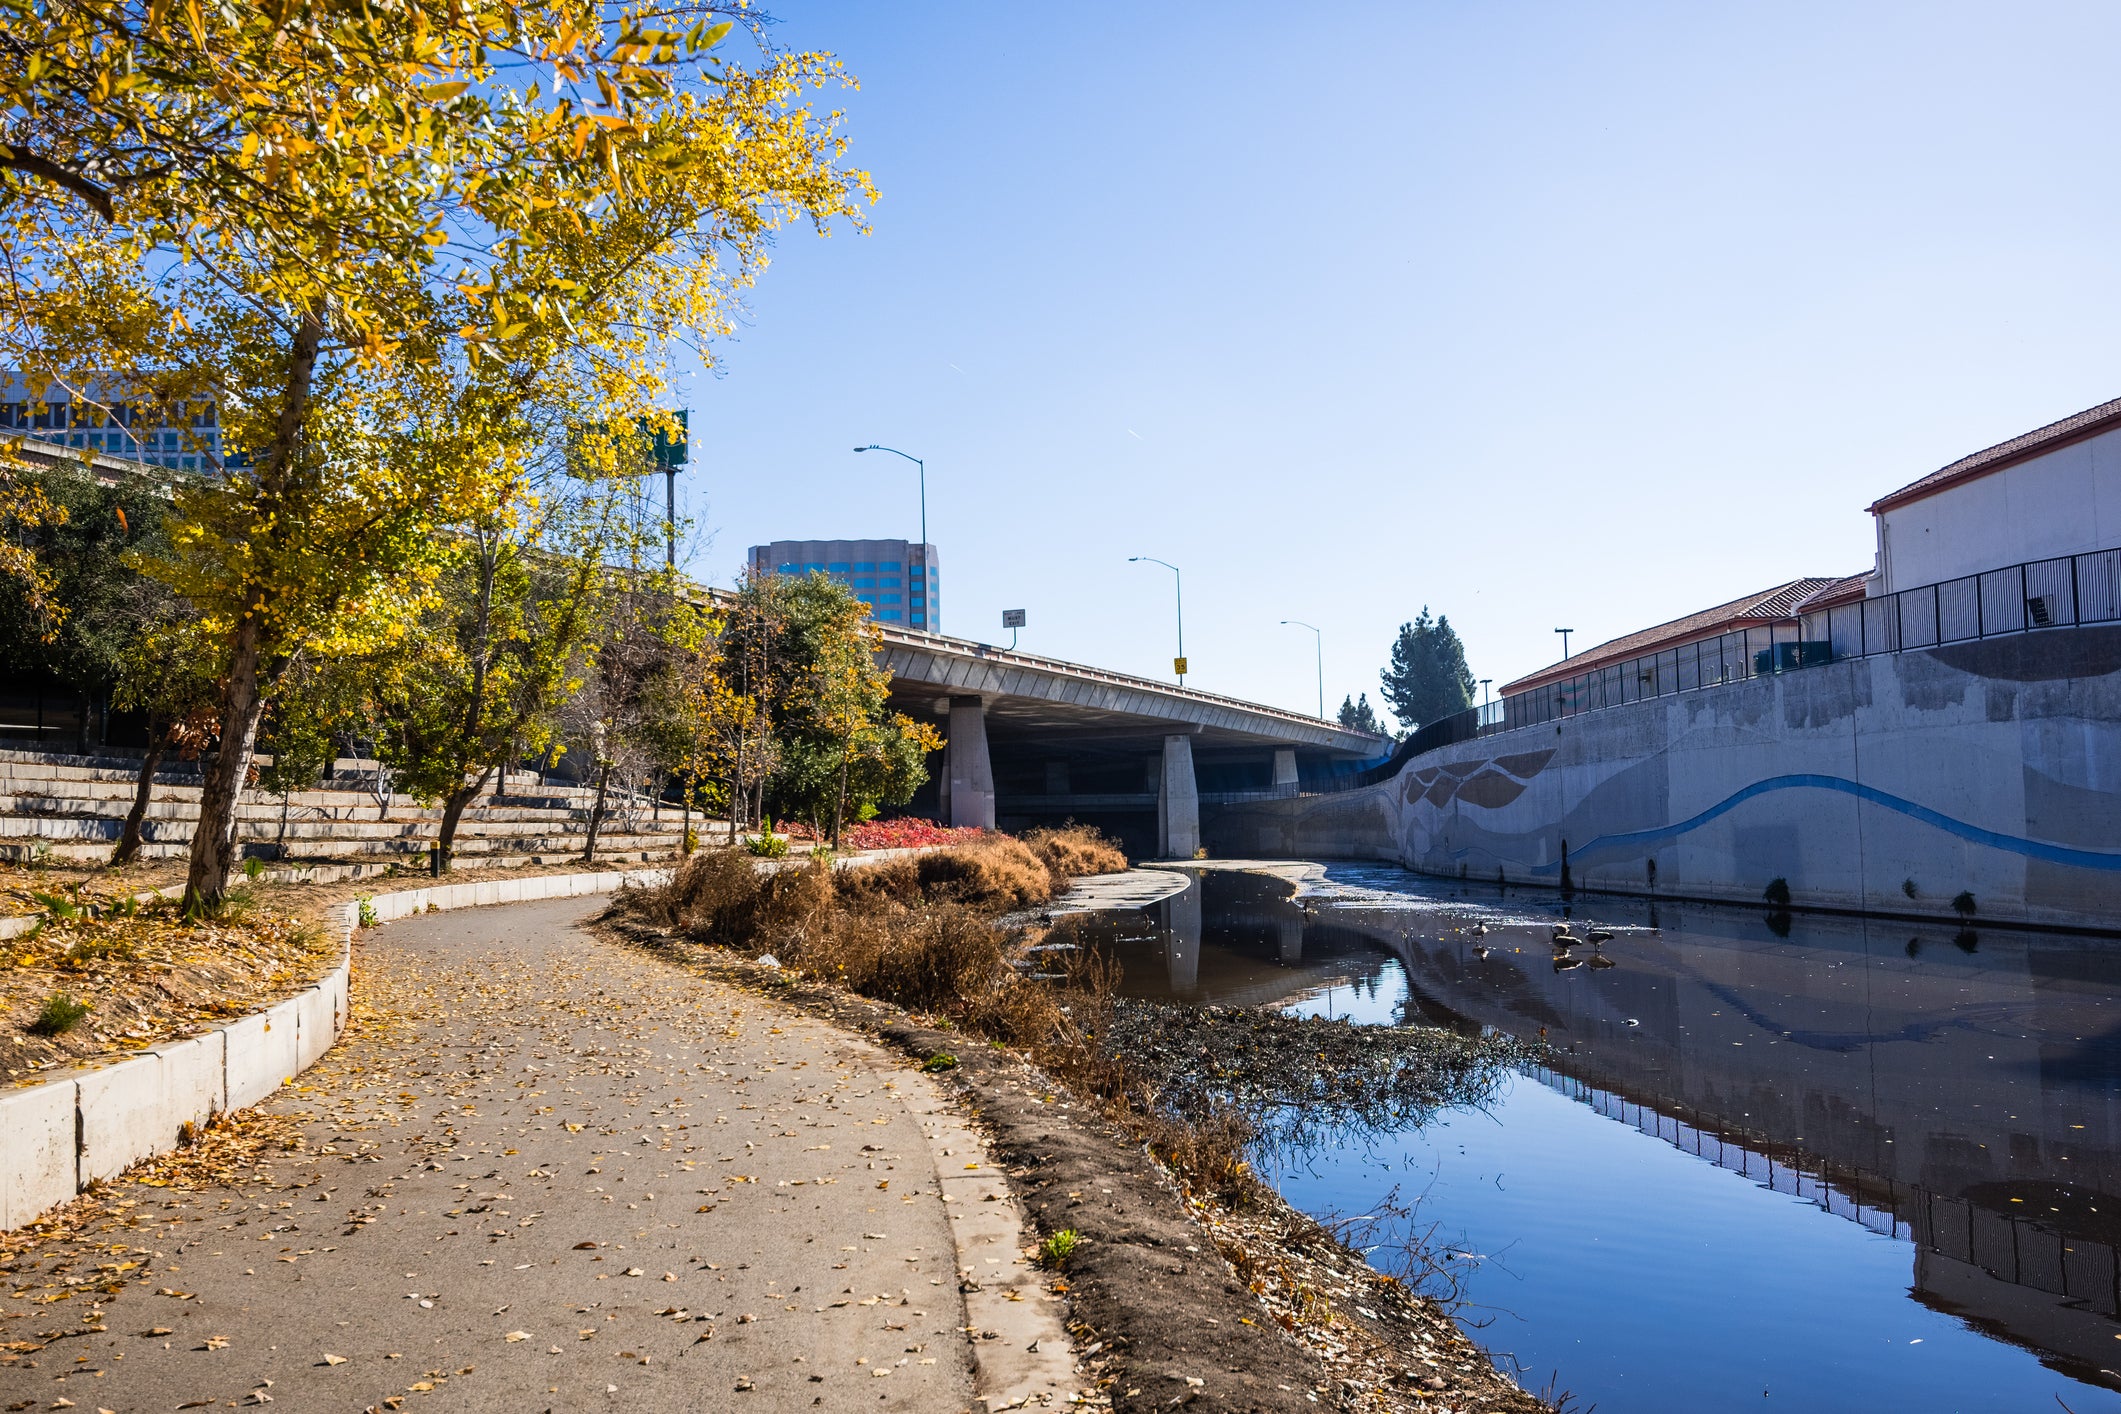 The Guadalupe River in San Jose, CA runs along an urban sidewalk  